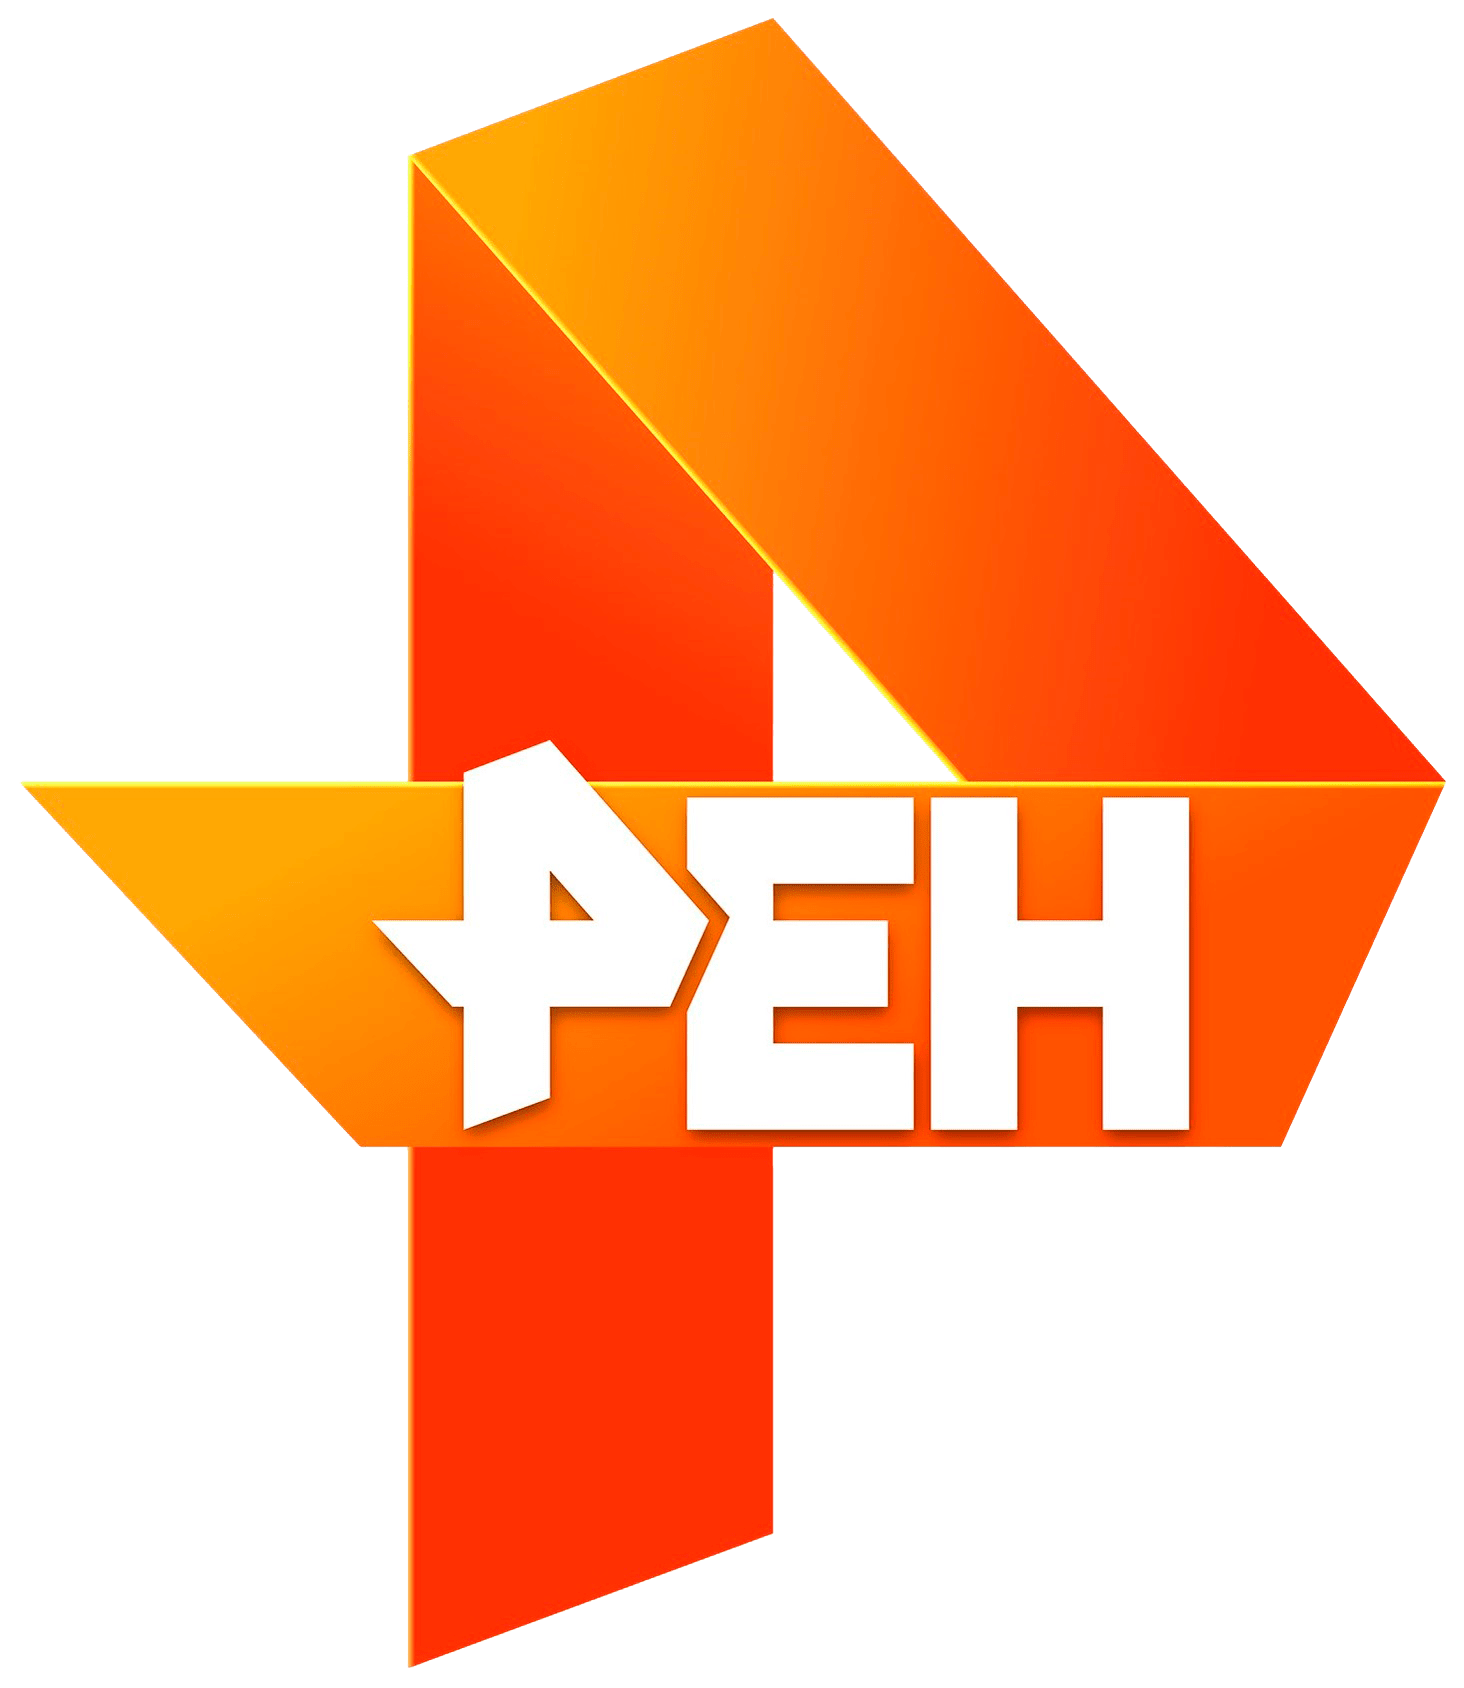 Раземщение рекламы РЕН ТВ, г. Красноярск